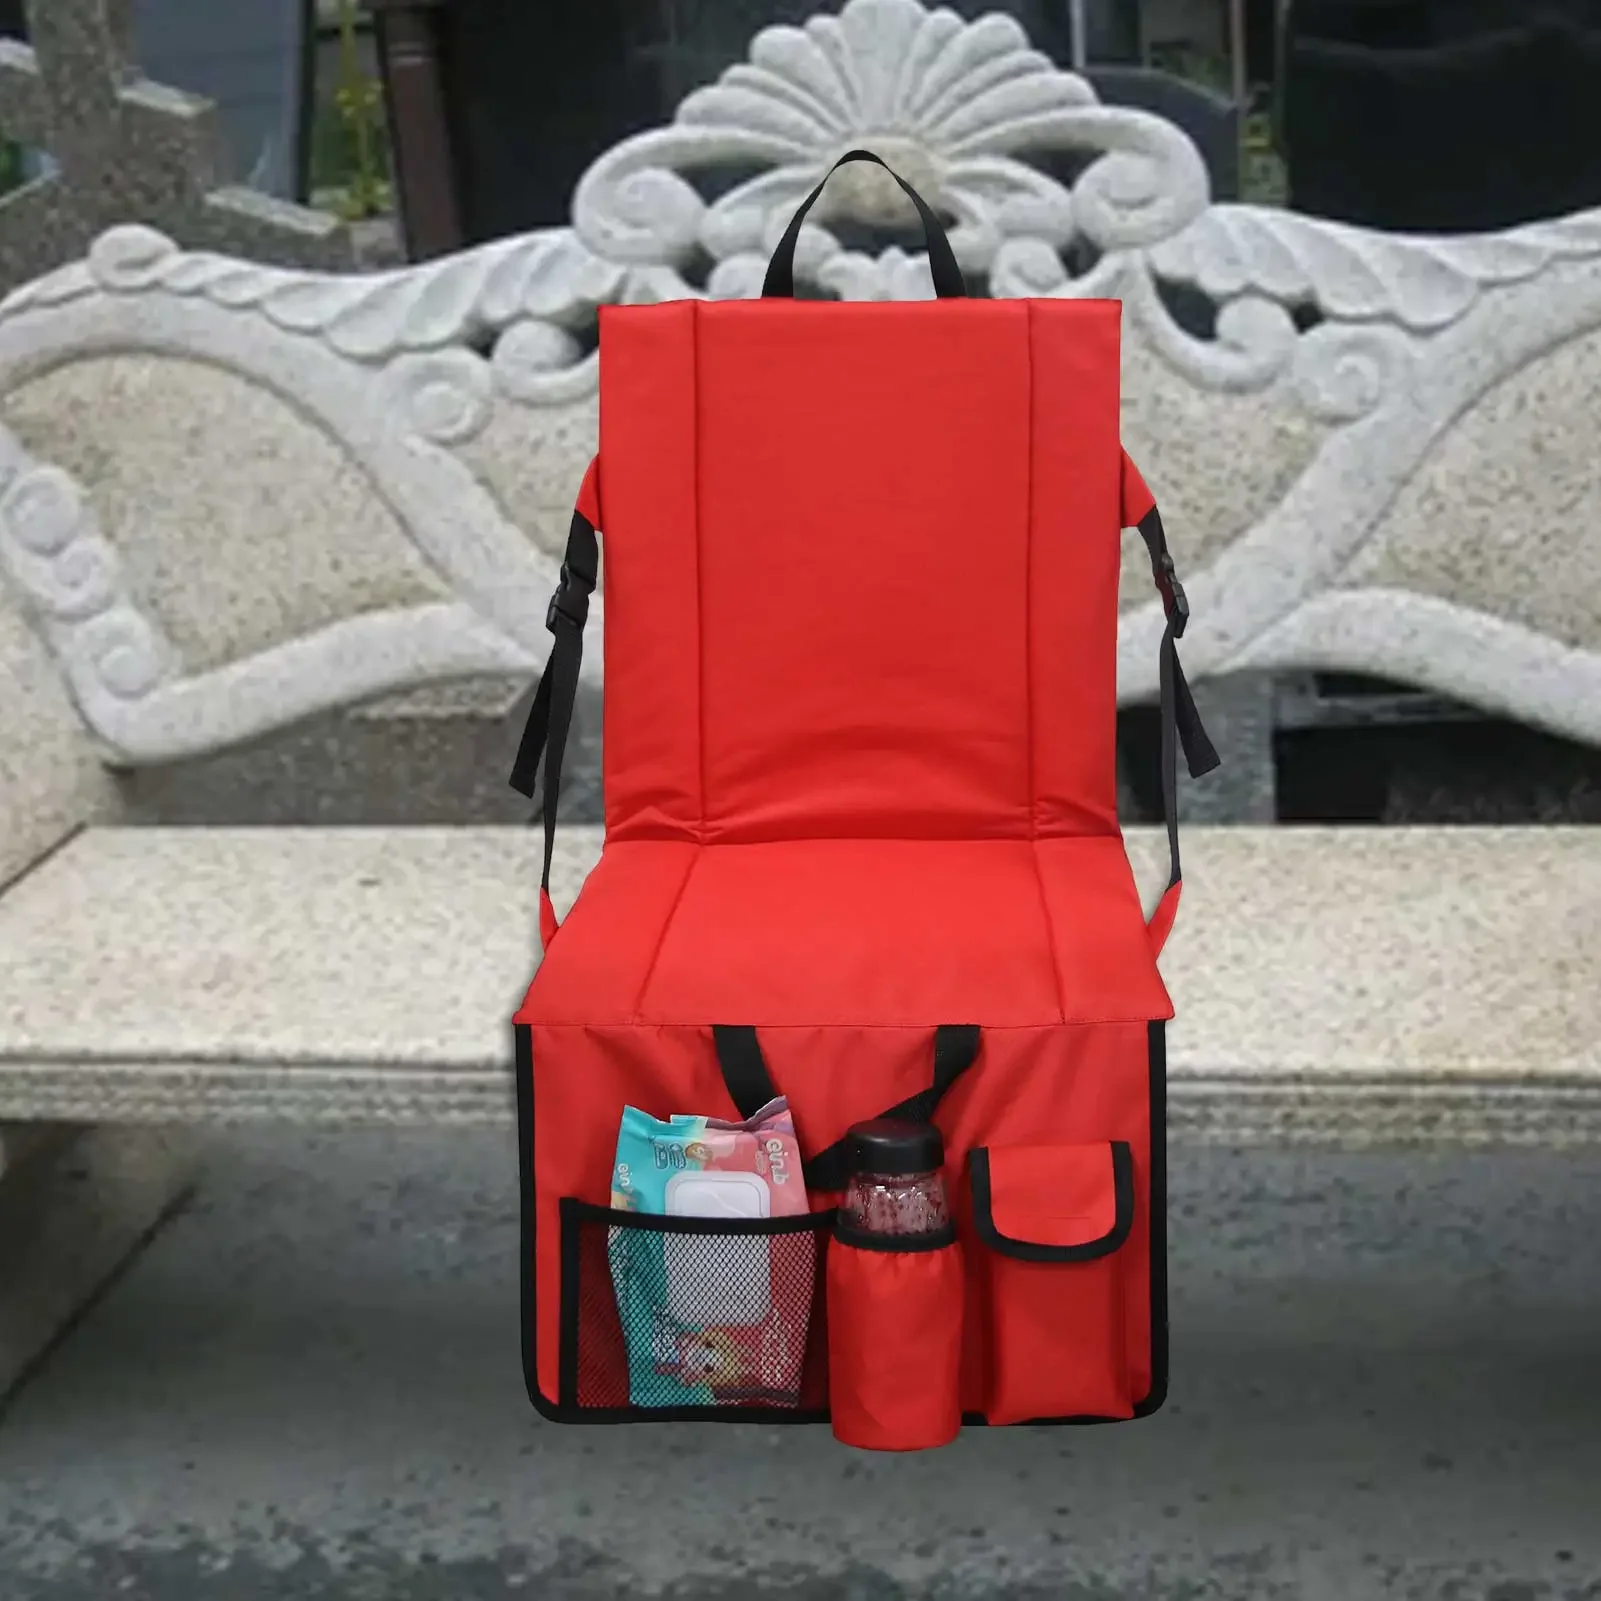 https://ae01.alicdn.com/kf/Sc539d108ae3a4815961e72e23599b3438/Cushion-Pad-Foldable-Portable-Bleacher-Chair-With-4-Storage-Pockets-Ideal-Stadium-Chair-Seat-Cushion-For.jpg